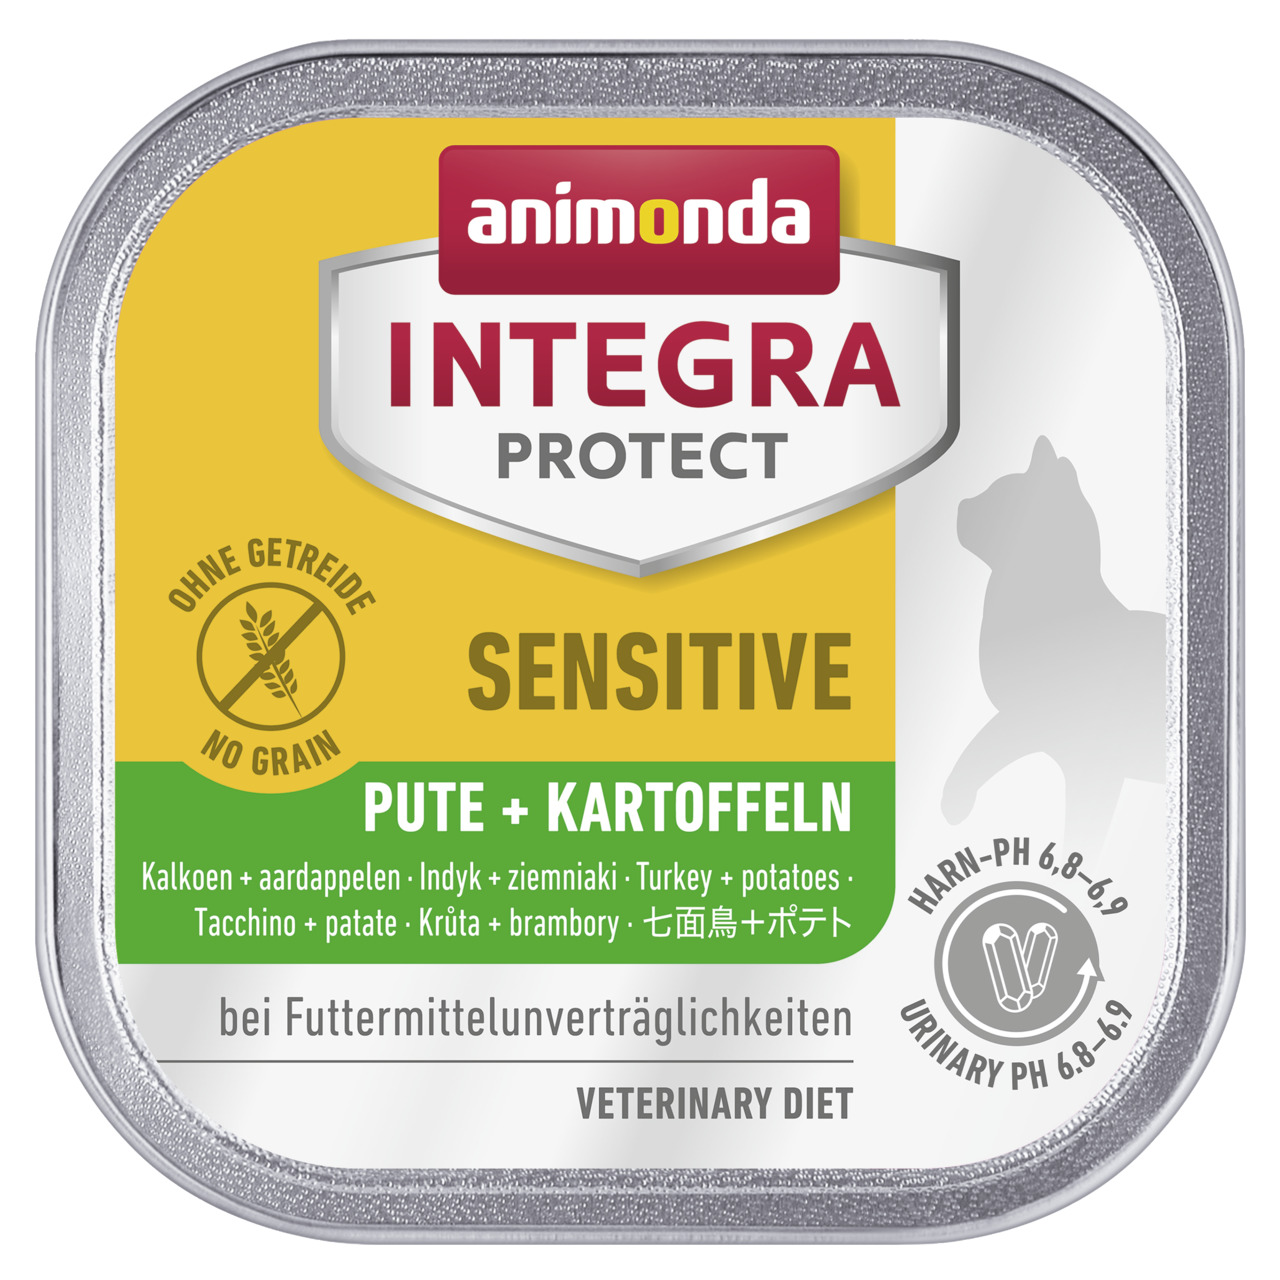 Animonda Integra Protect Sensitive Pute + Kartoffeln Katzen Nassfutter 100 g